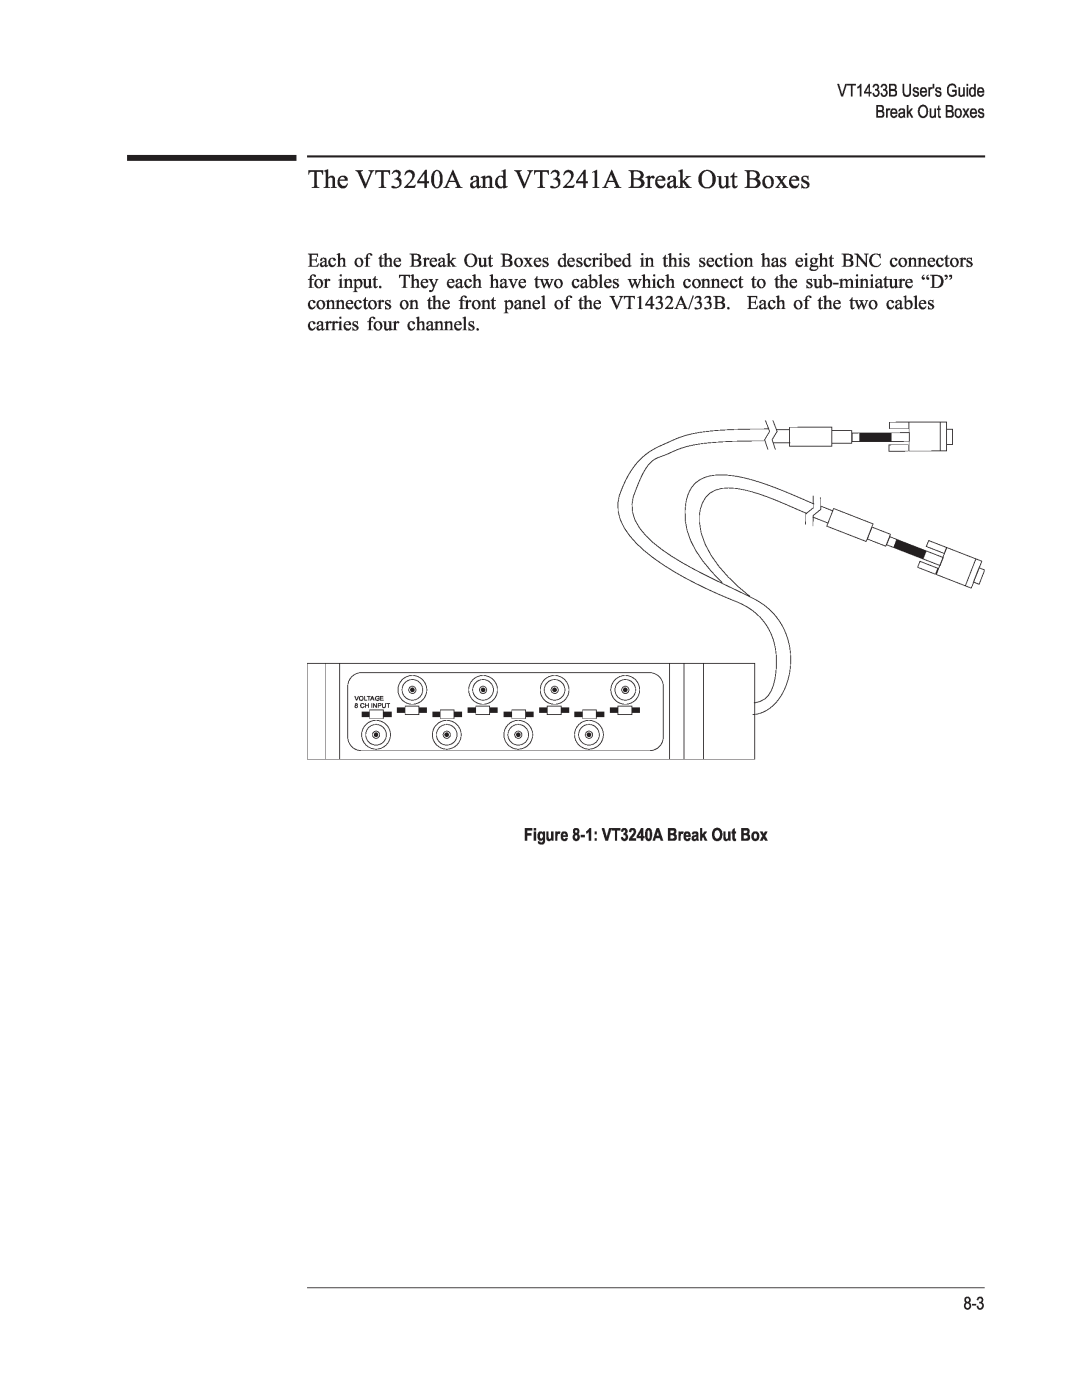 VXI VT1433B manual The VT3240A and VT3241A Break Out Boxes, 1:VT3240A Break Out Box, VOLTAGE 8 CH INPUT 